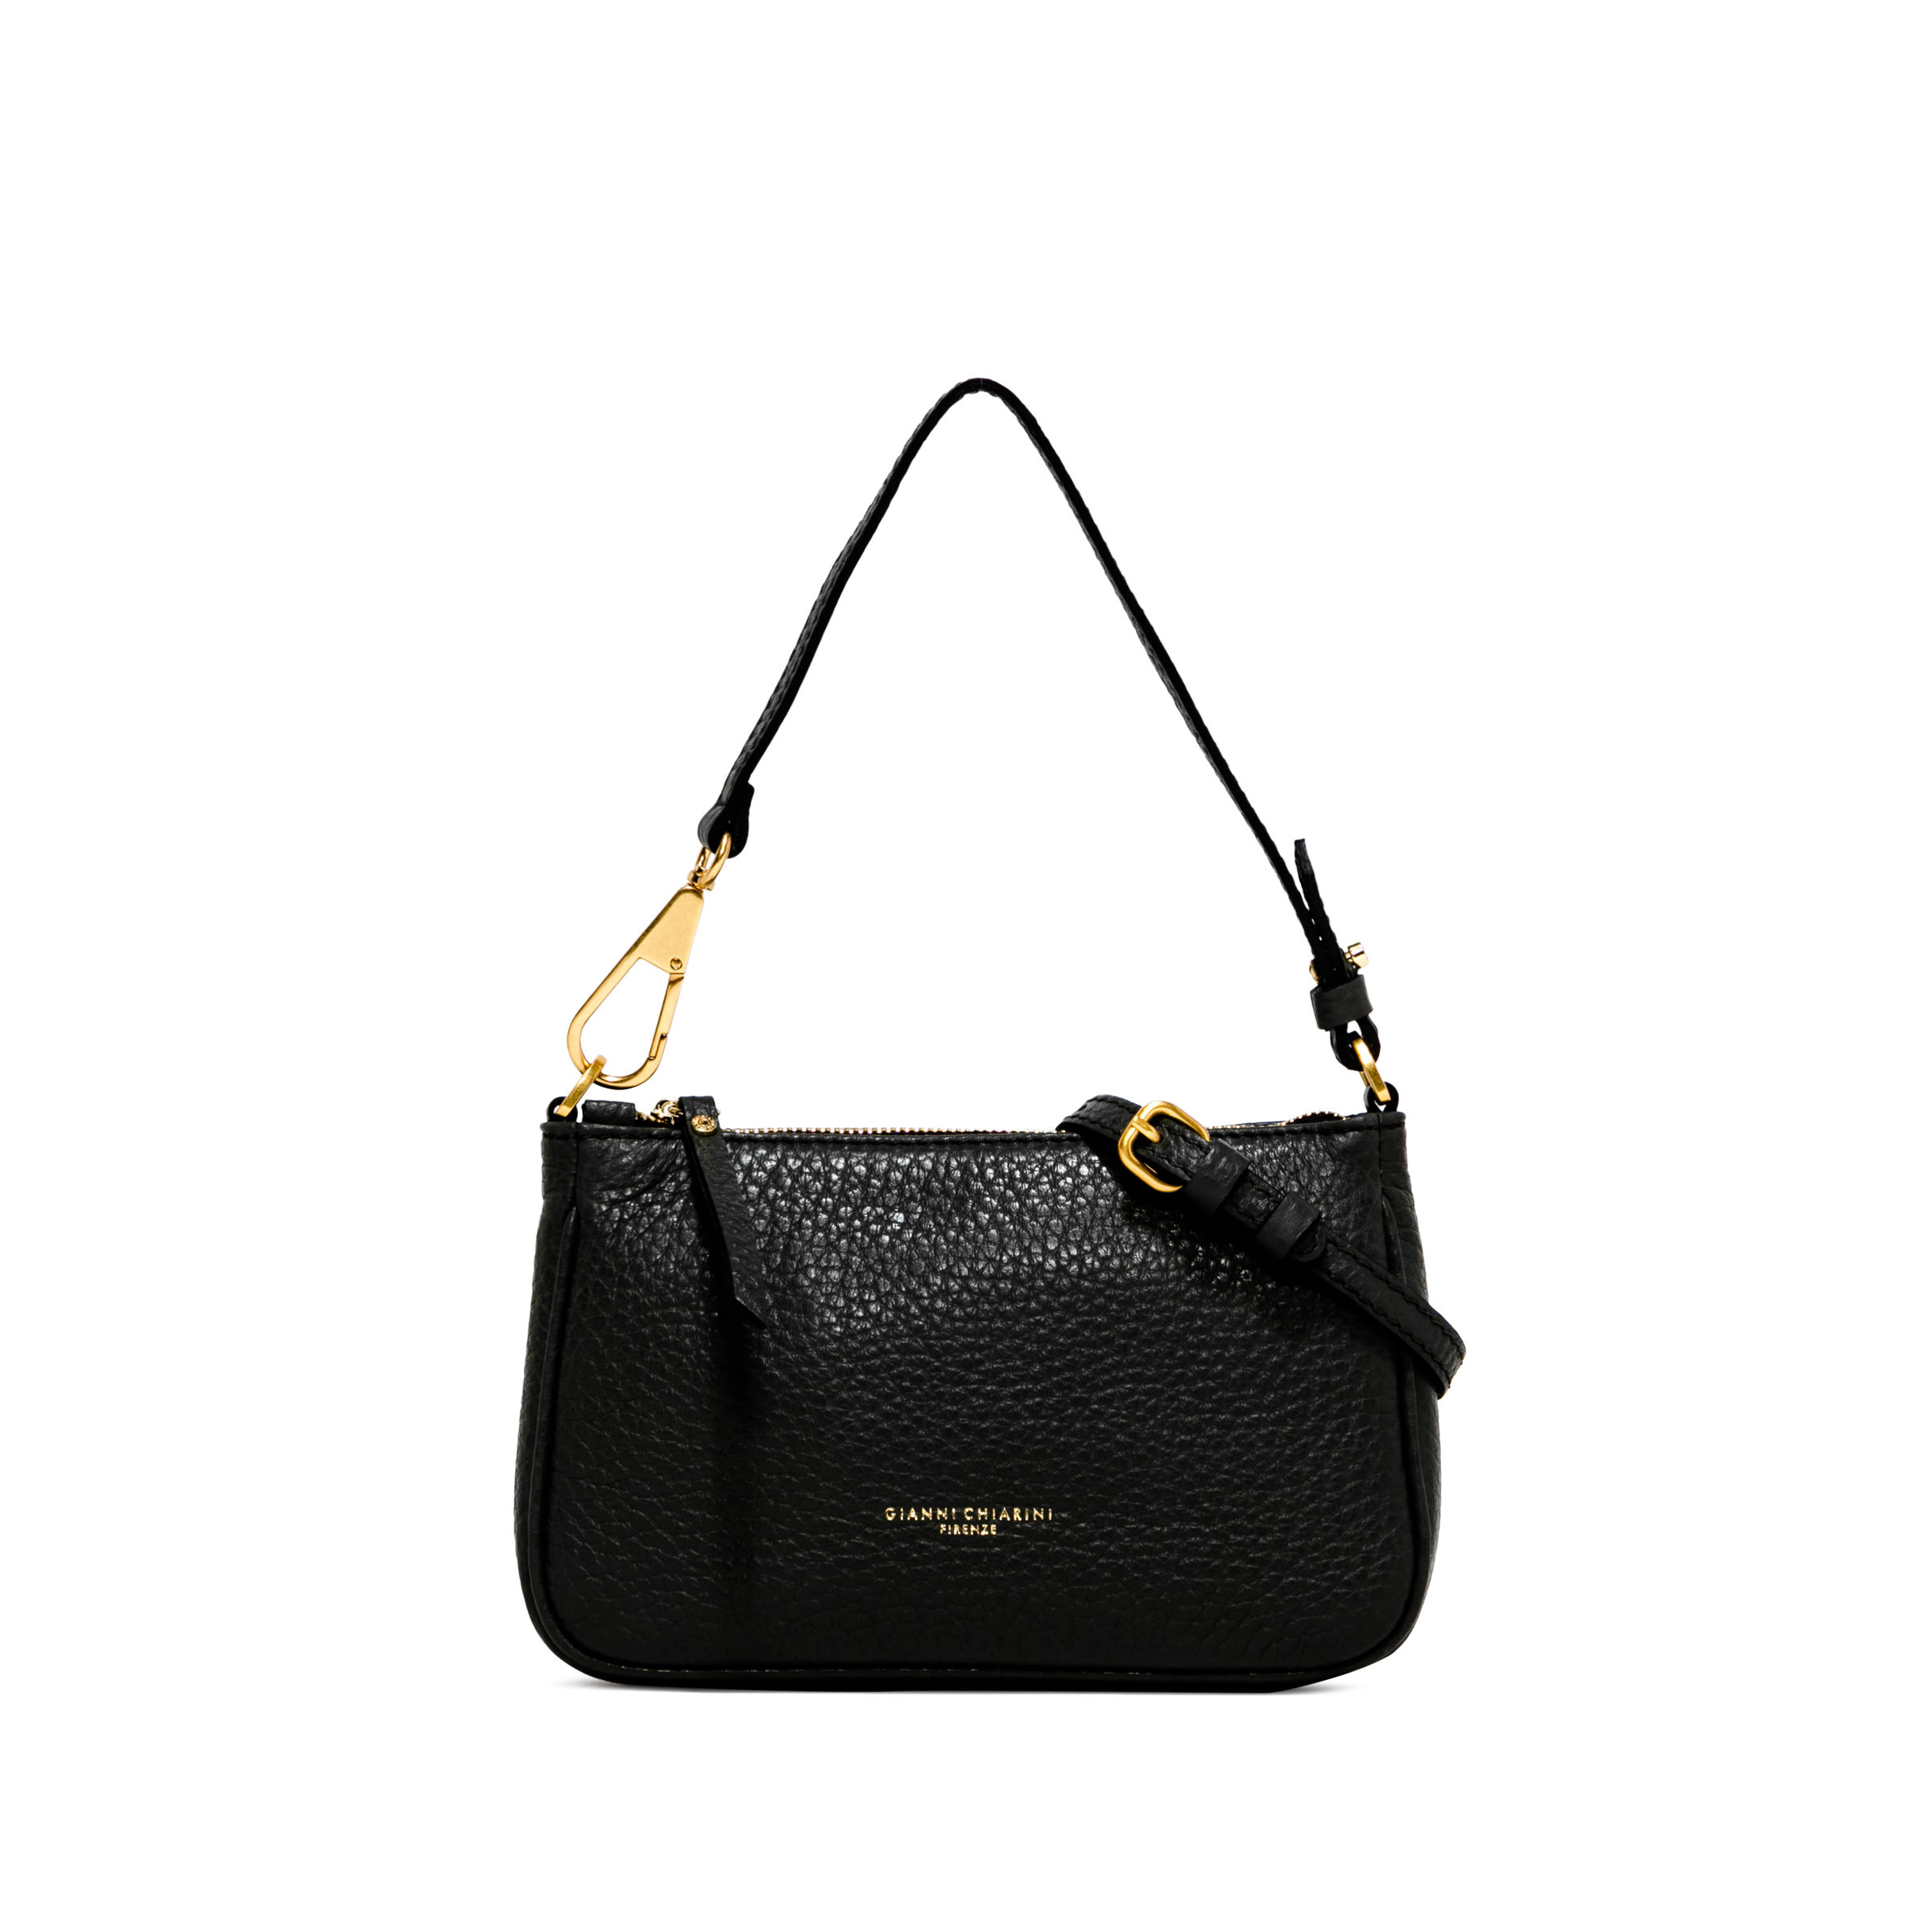 Gianni Chiarini - Brooke bag in leather, Black, large image number 0